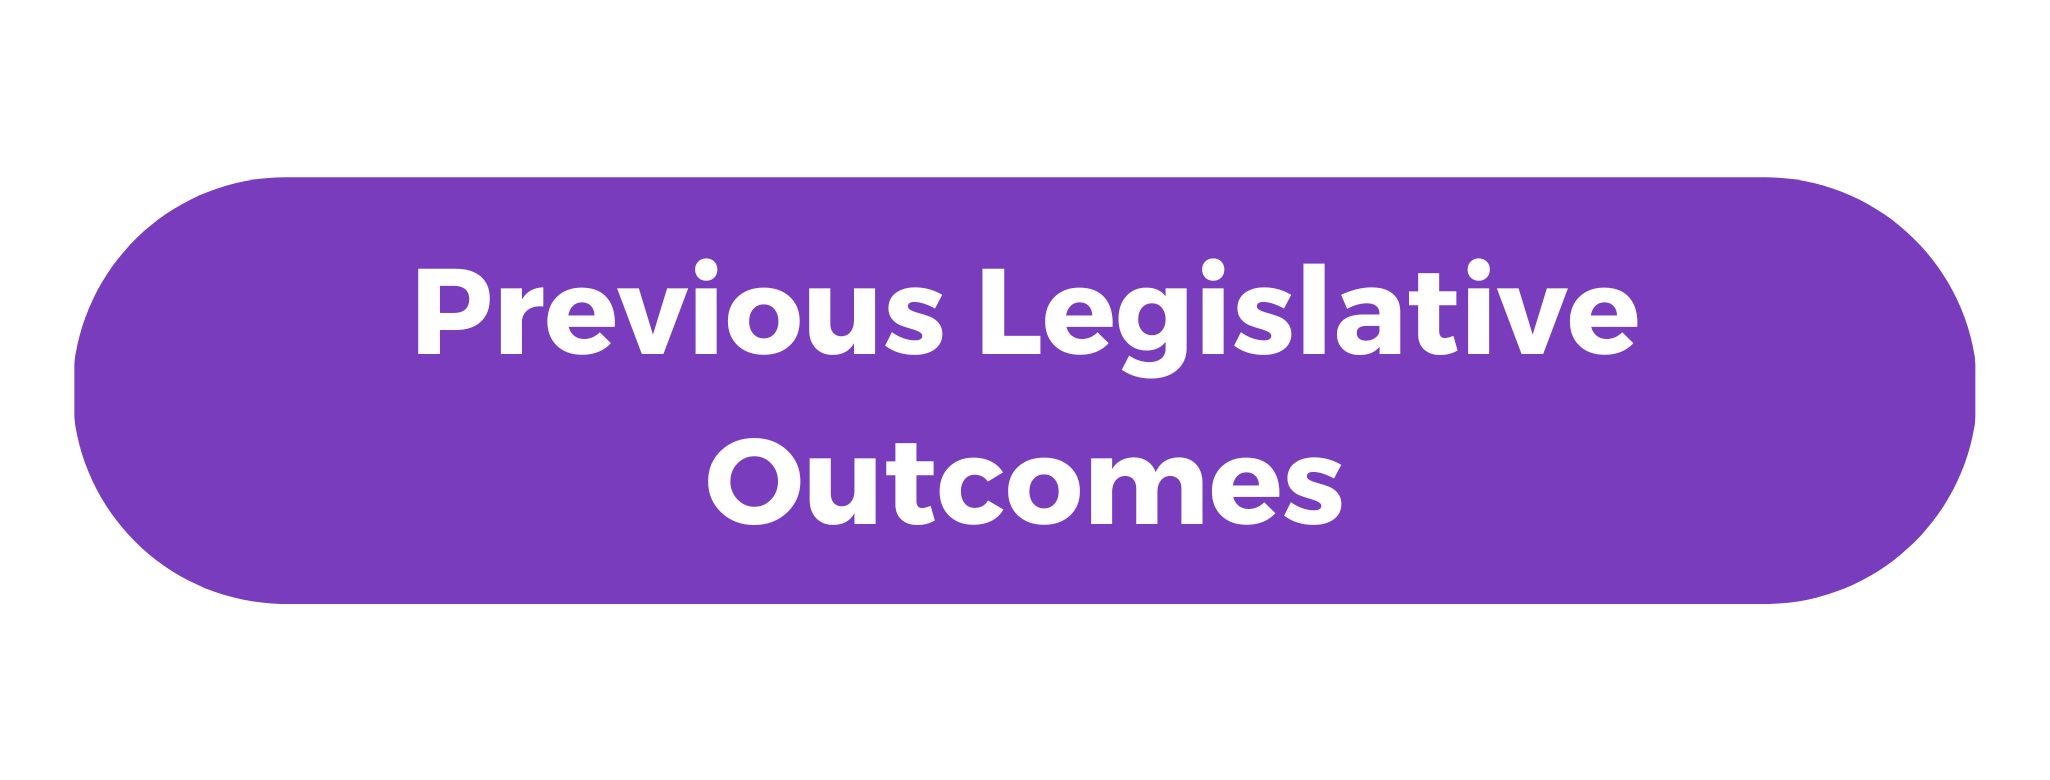 button that says previous legislative outcomes